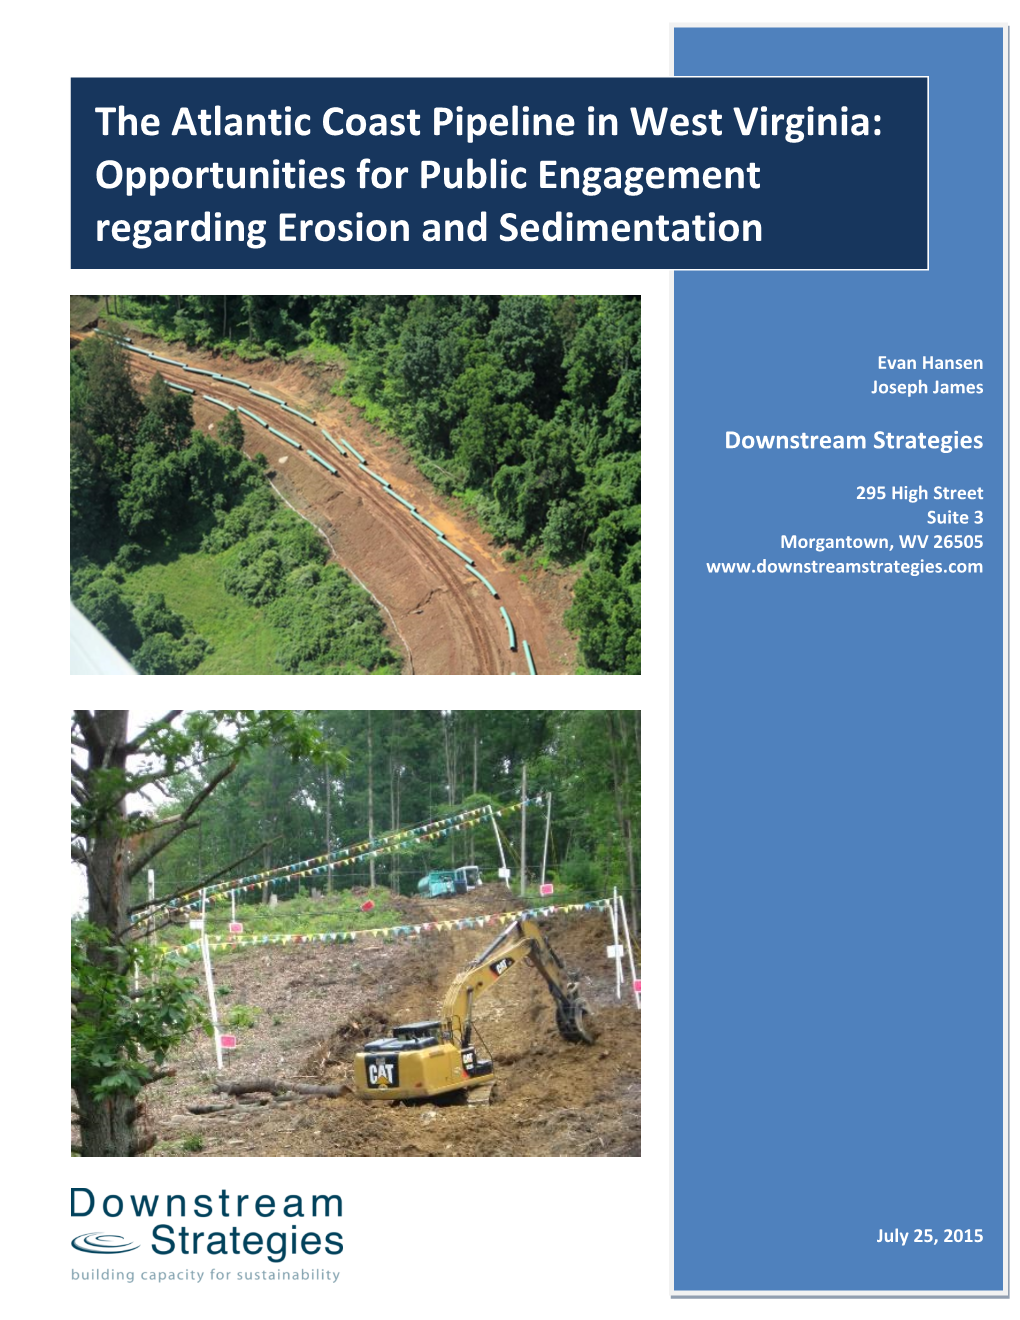 The Atlantic Coast Pipeline in West Virginia: Opportun Ities for Public Engagement Regarding Erosion and Sedimentation